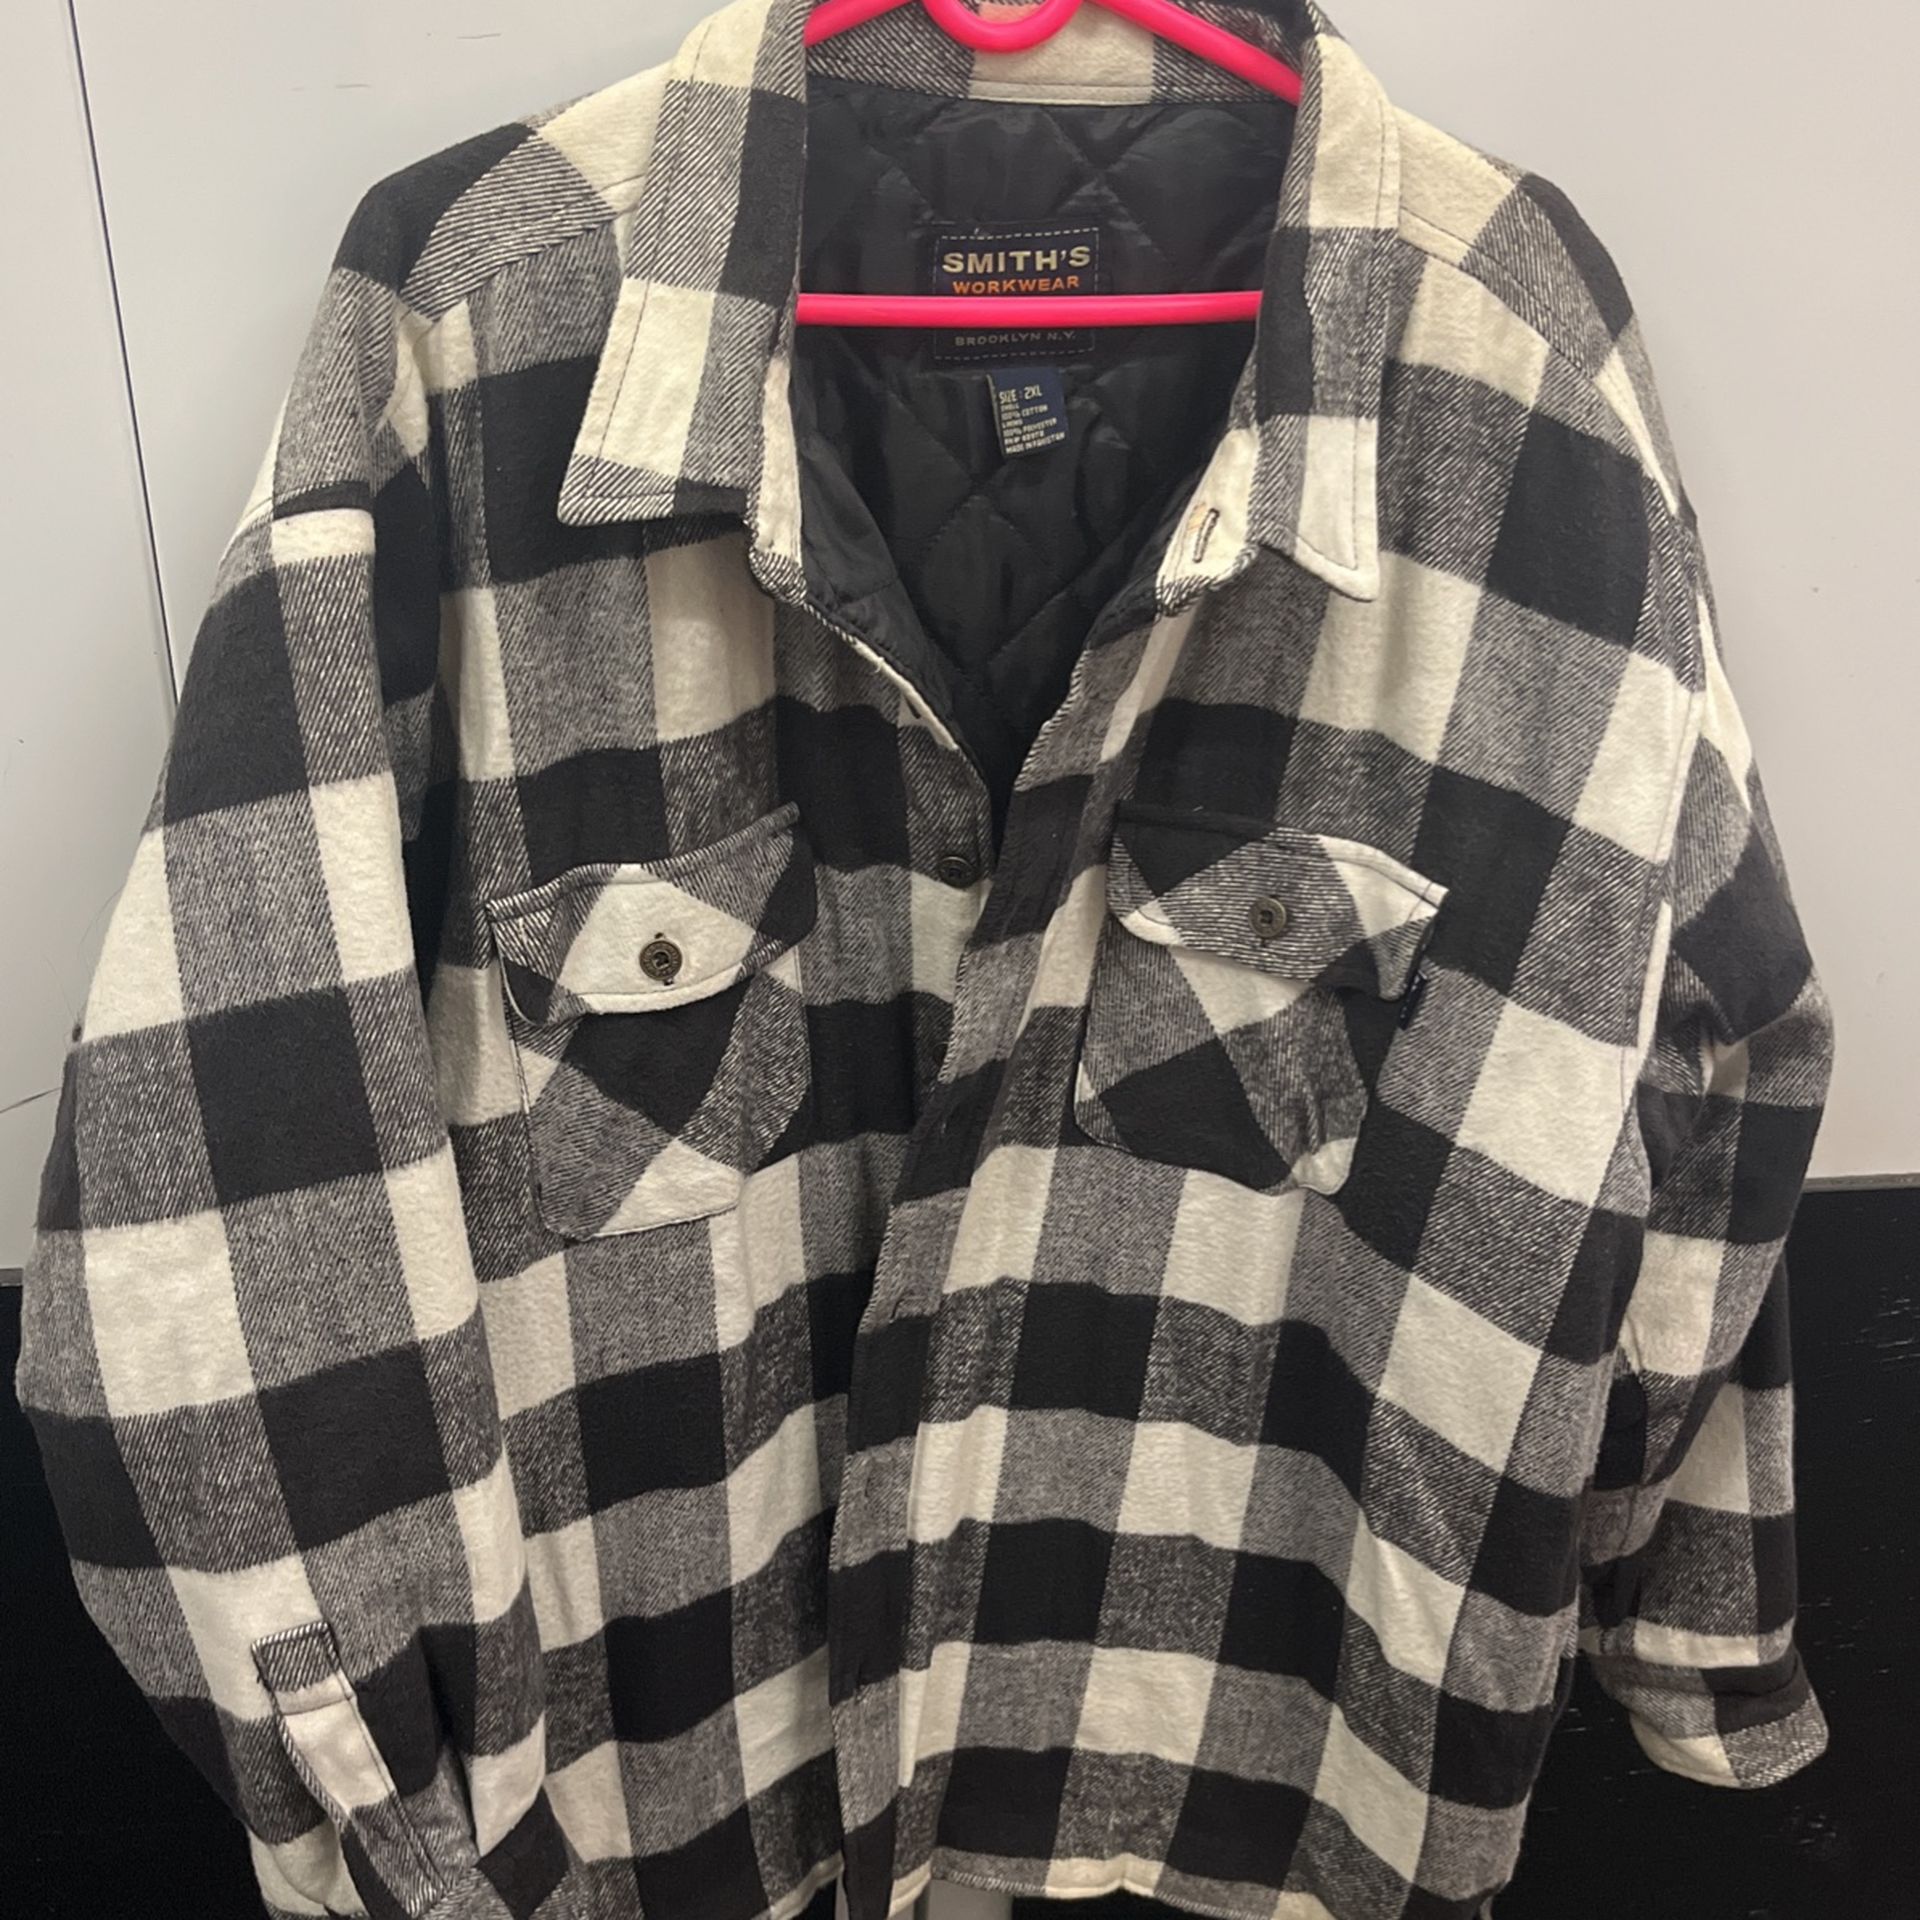 SMITH’S Workwear plaid shirt jacket